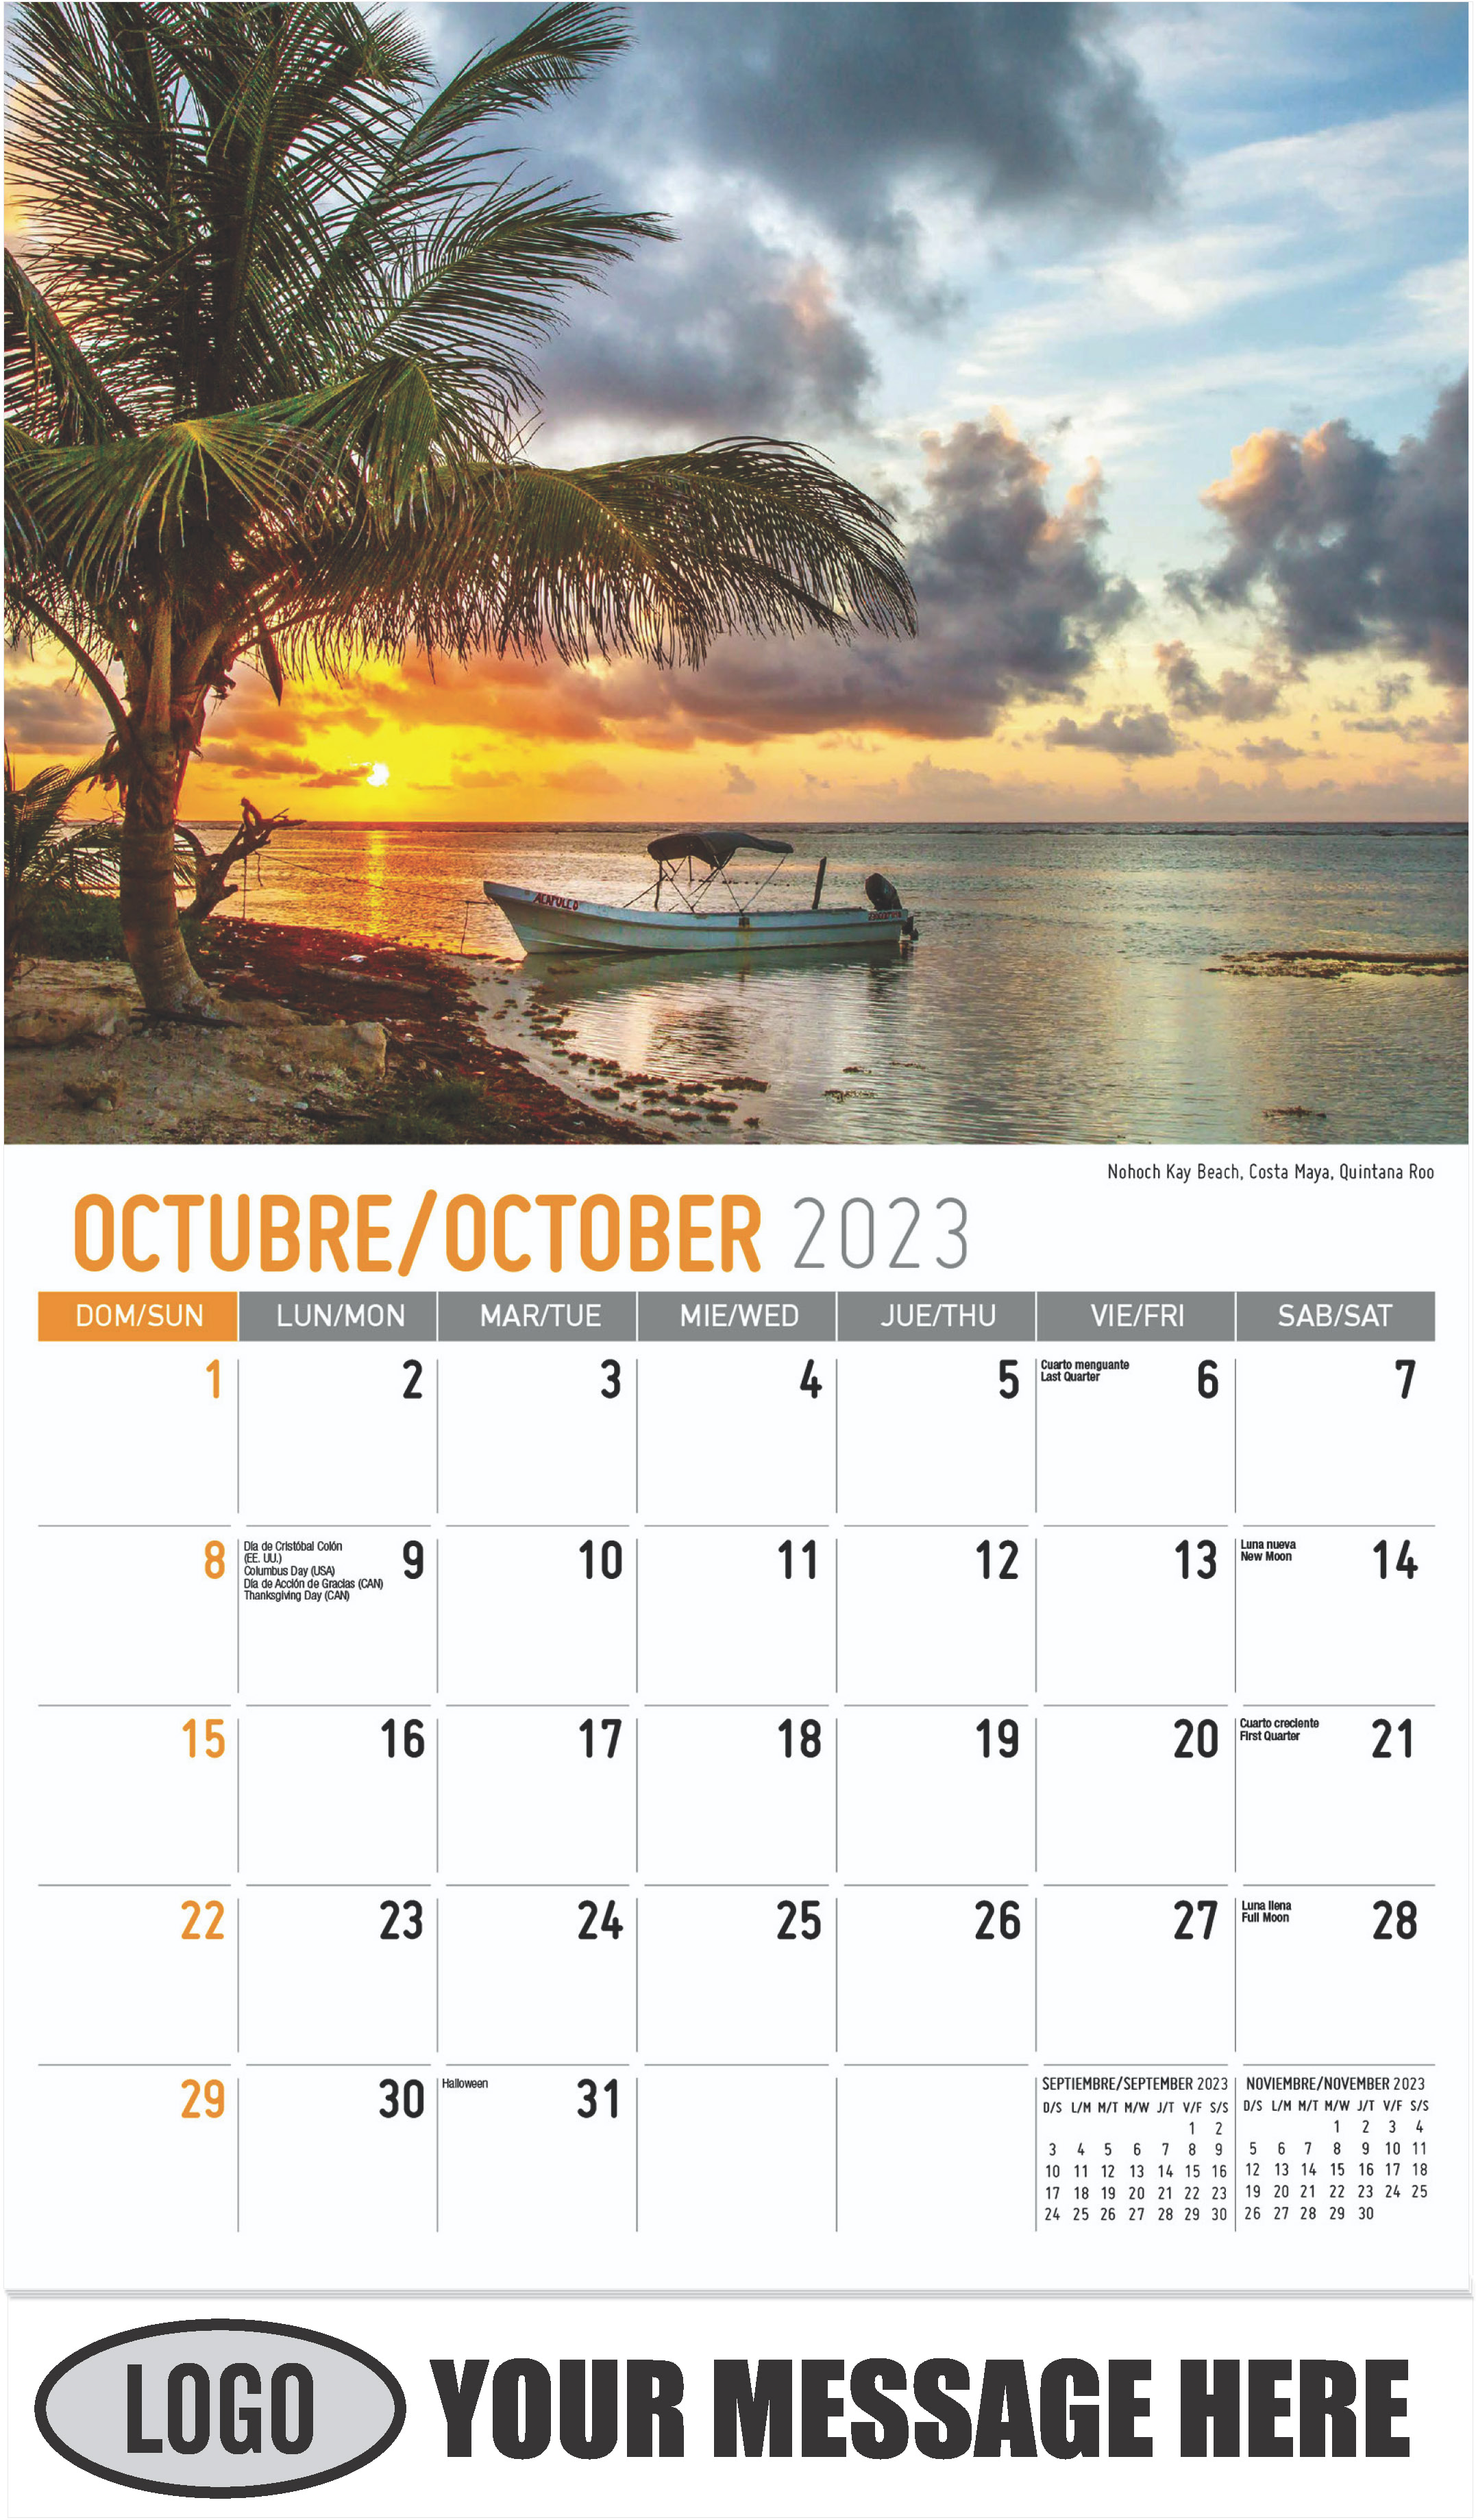 FALSE - October - Scenes of Mexico (Spanish-English bilingual) 2023 Promotional Calendar